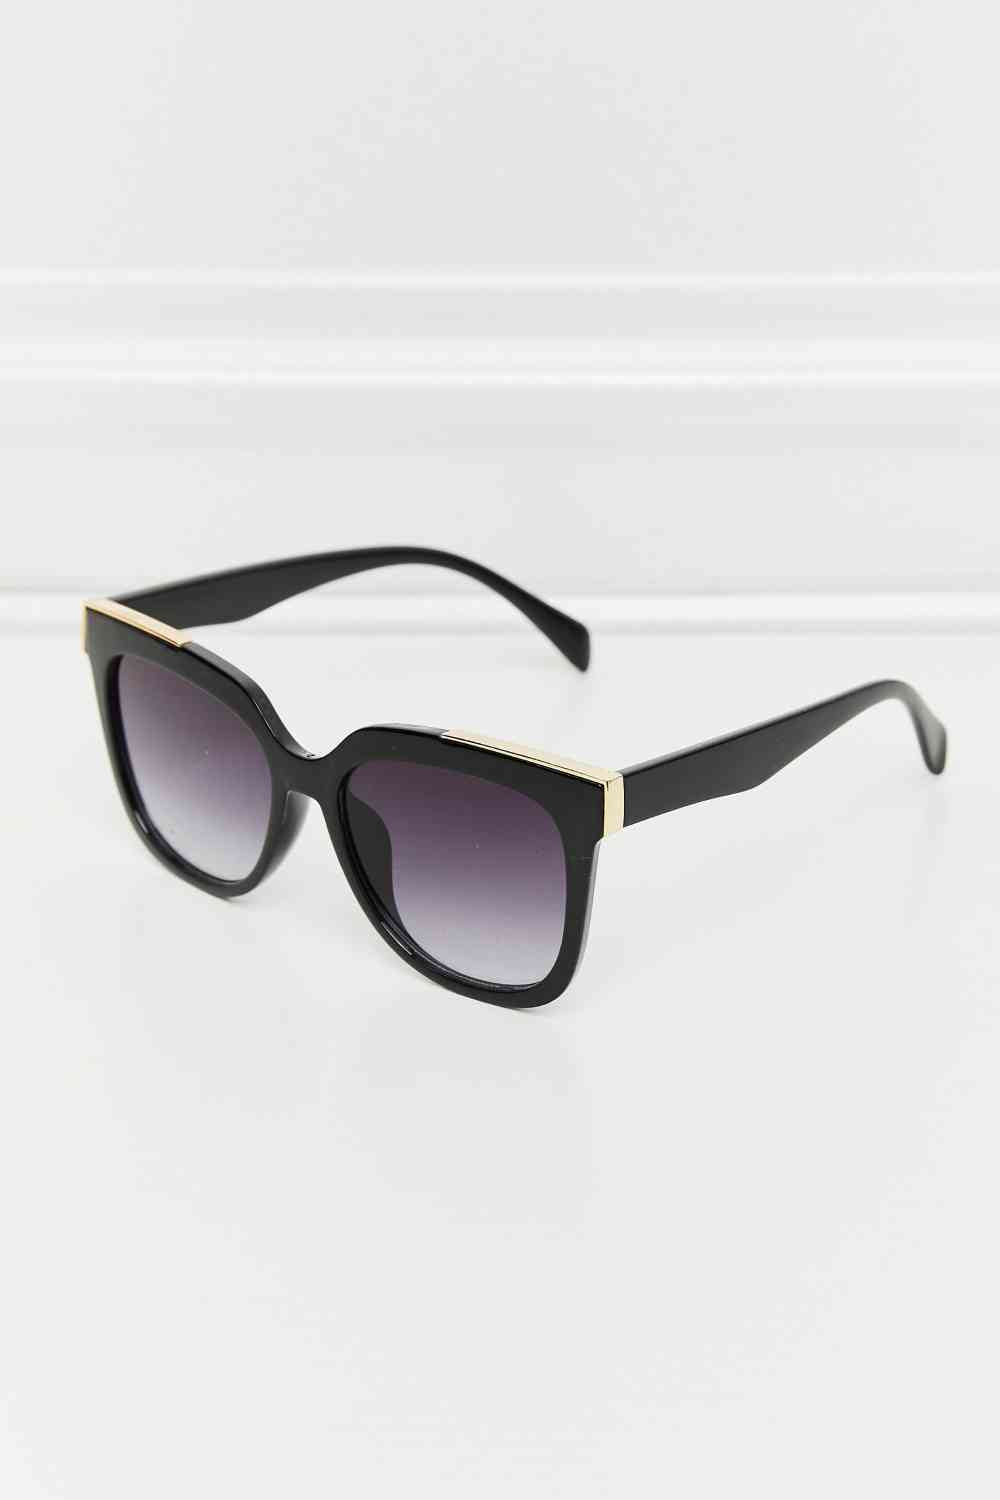 TEEK - Accent Full Rim Sunglasses EYEGLASSES TEEK Trend   